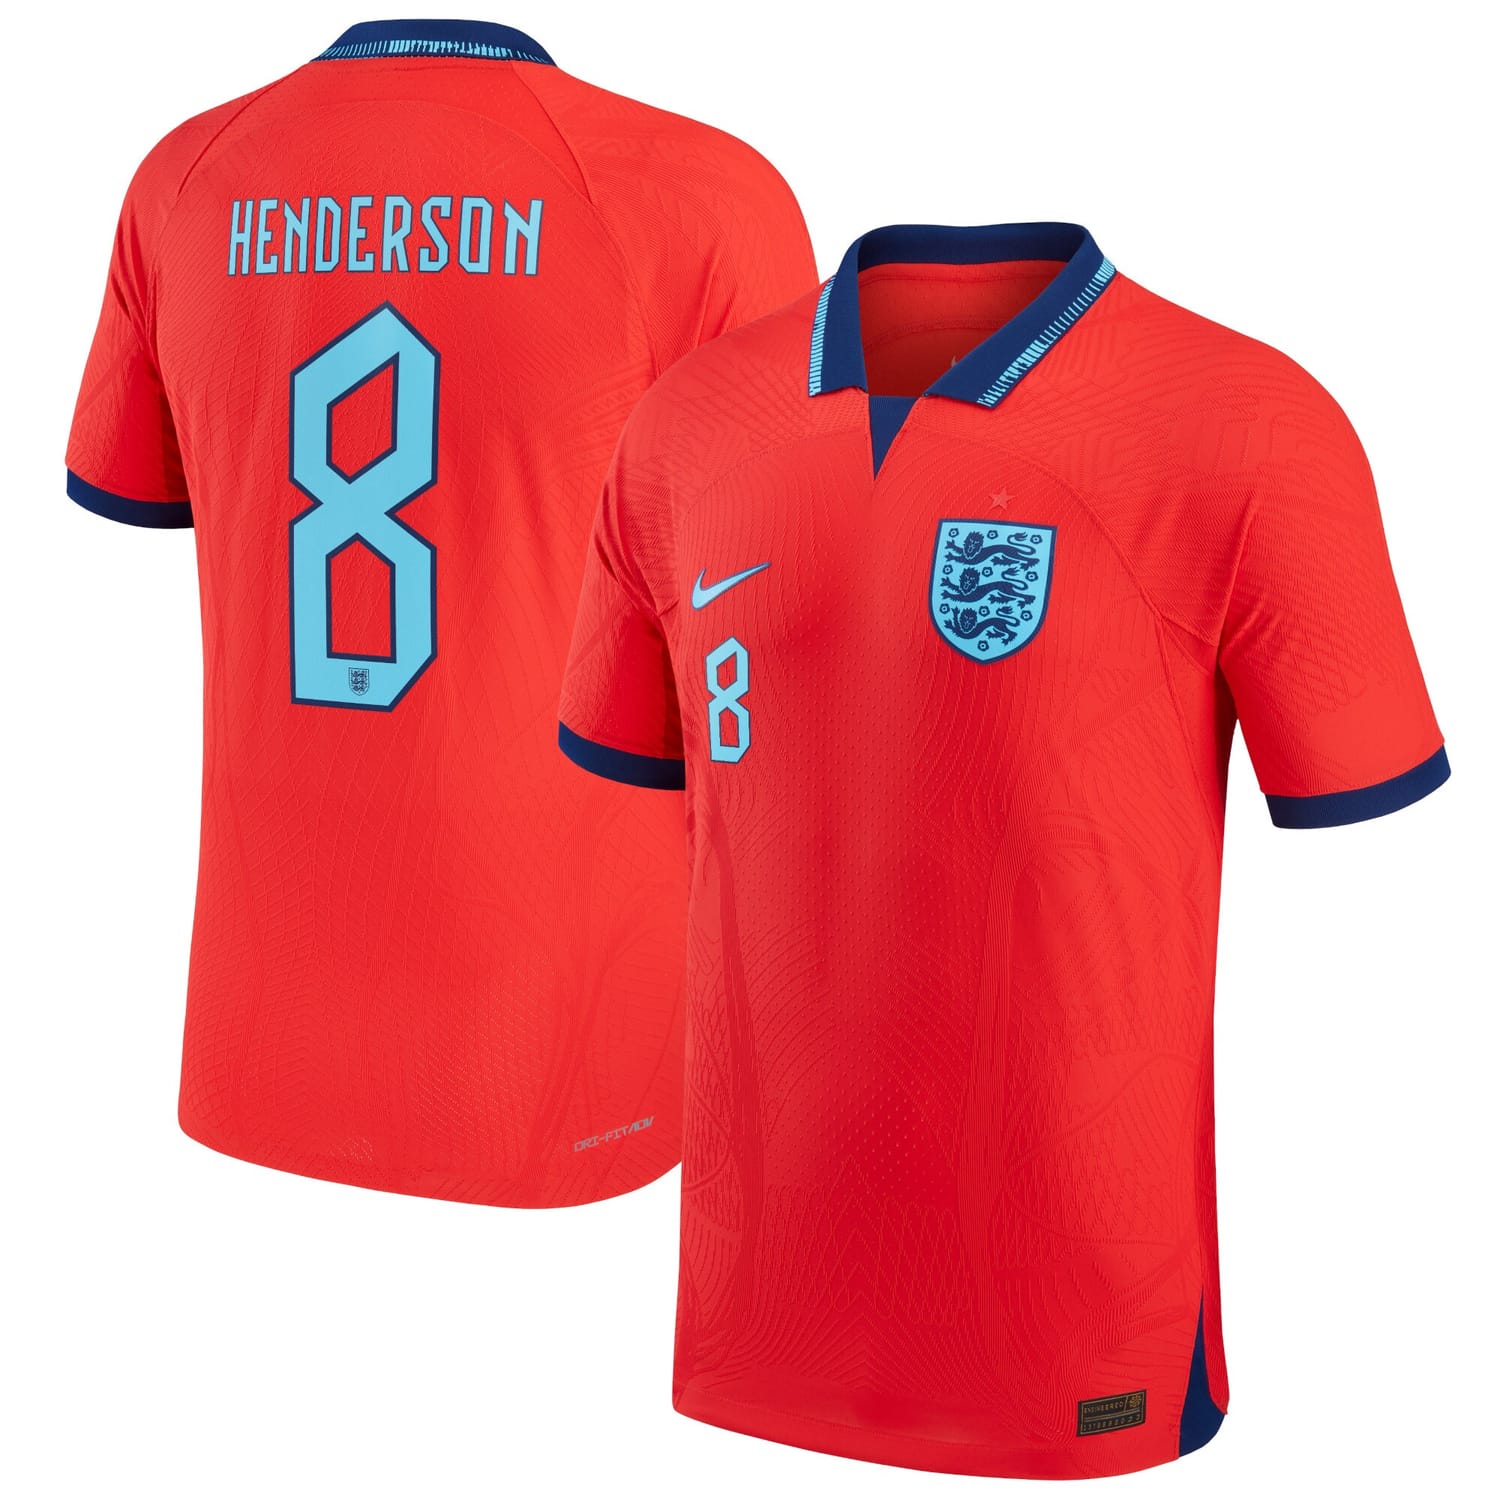 England National Team Away Authentic Jersey Shirt 2022 player Jordan Henderson 8 printing for Men